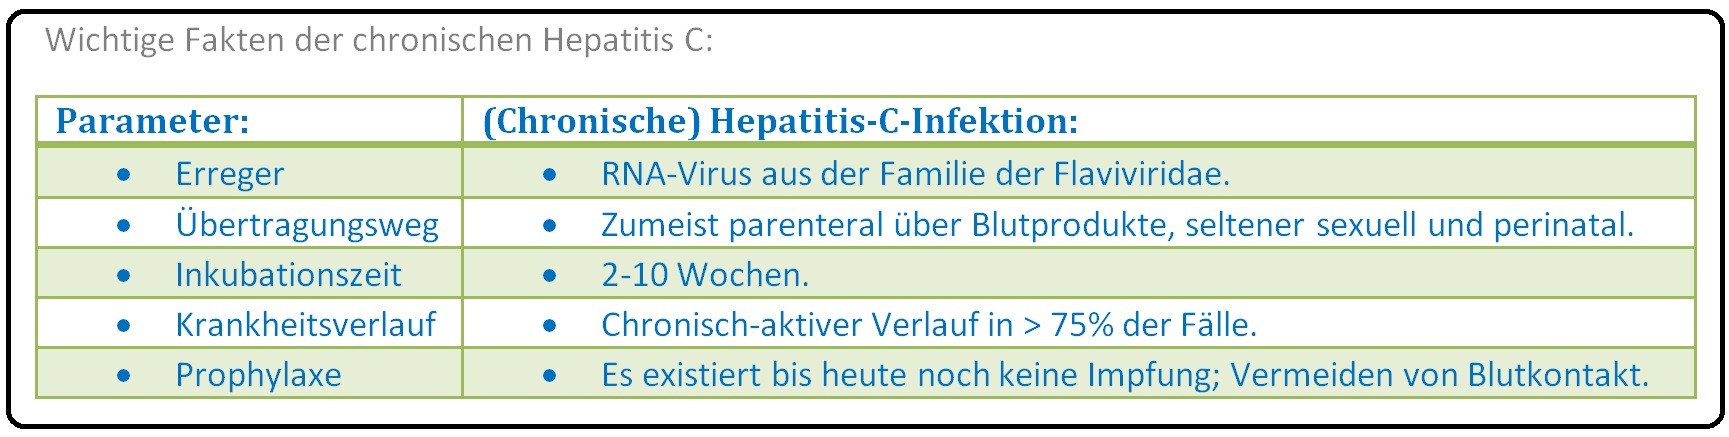 553 Wichtige Fakten der chronischen Hepatitis C